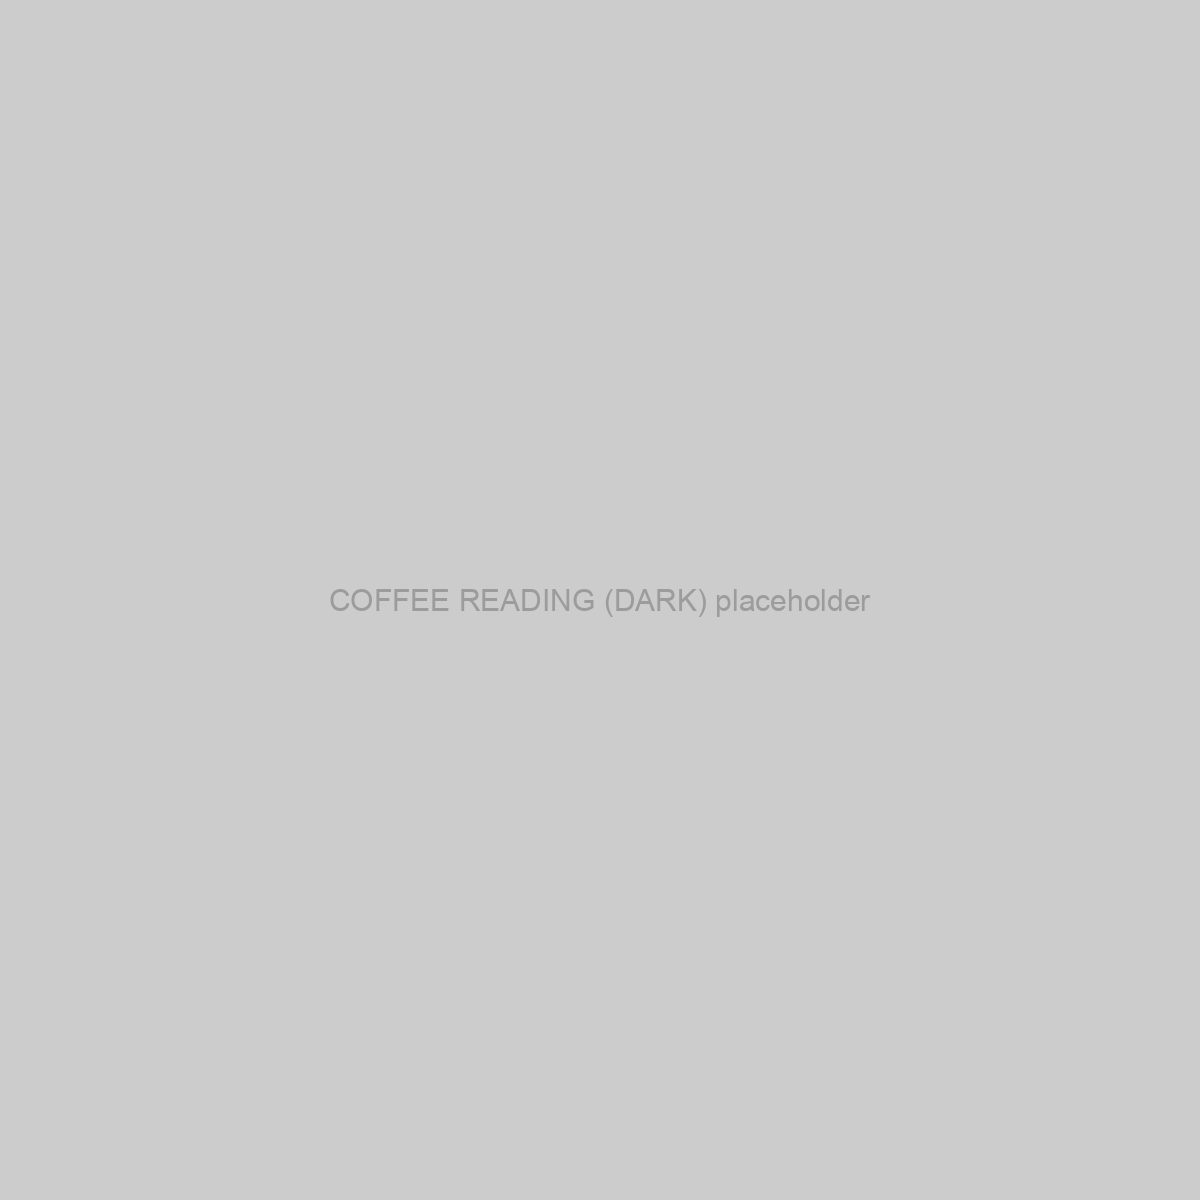 COFFEE READING (DARK) Placeholder Image